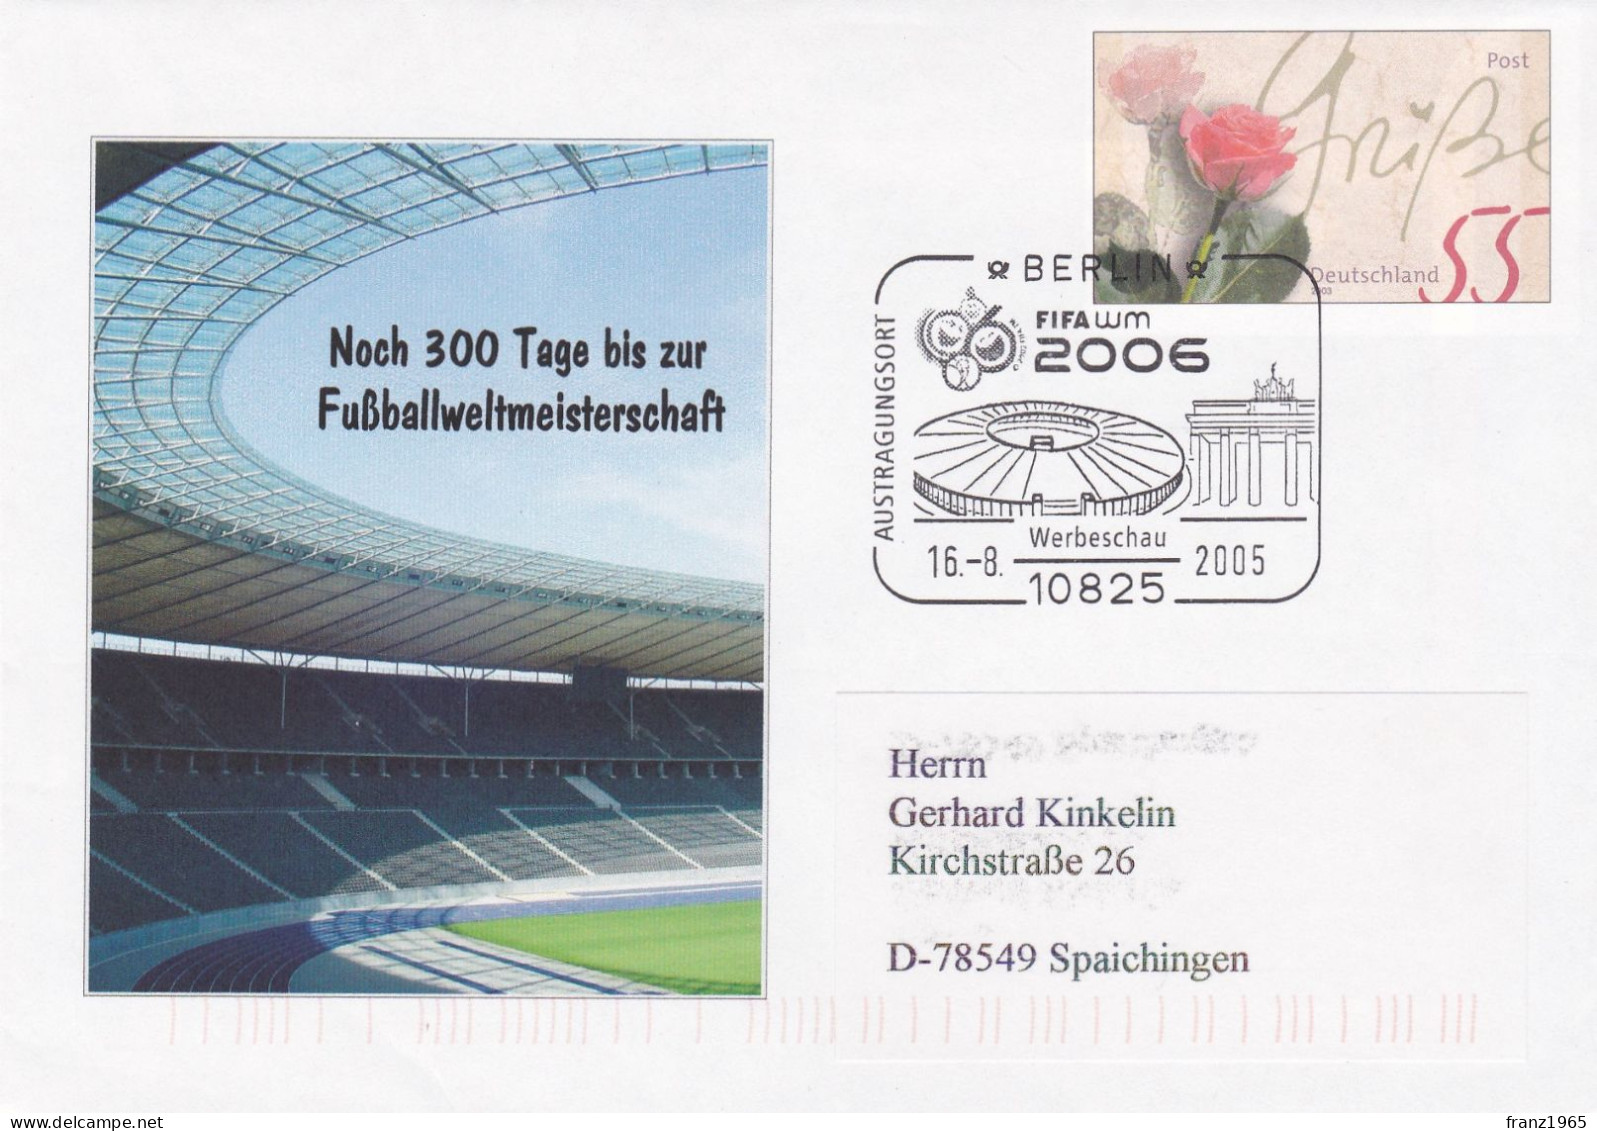 FIFA-WM 2006 - Berlin,16.8.2005 - 2006 – Germania